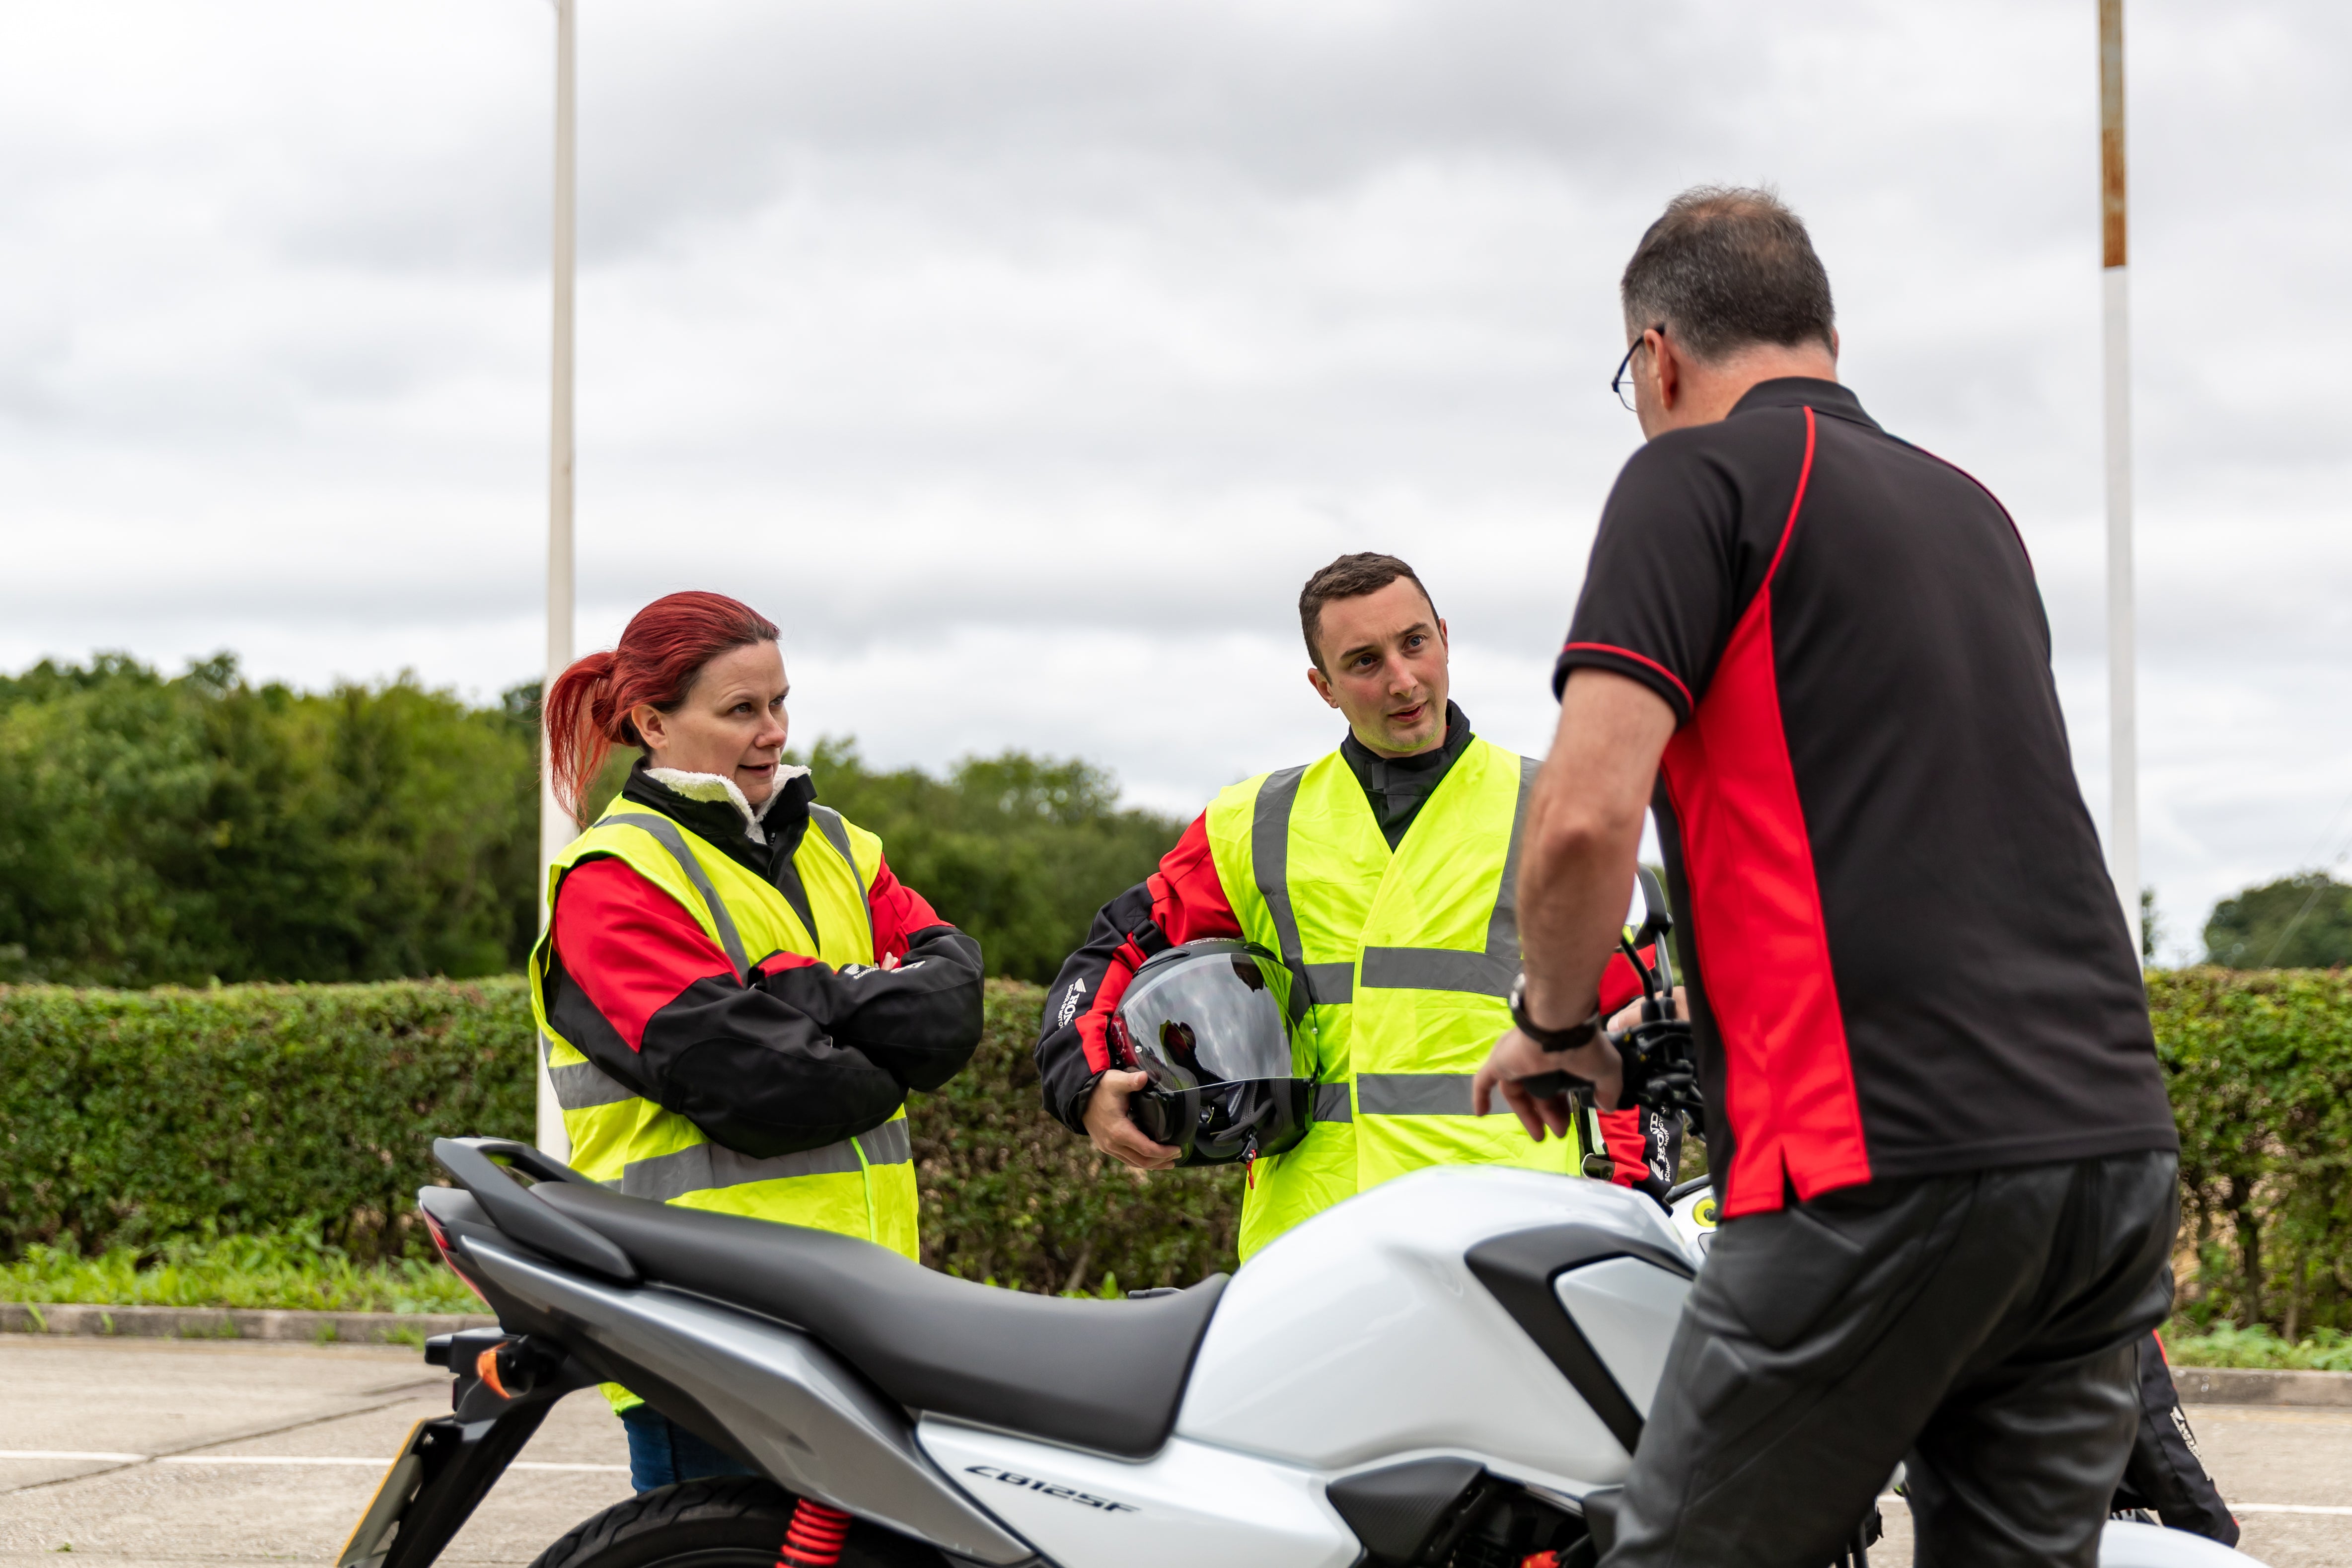 CBT Bike Test Bournemouth | Dorset Motorcycle Training, Motorcycle Training Poole | CBT Test Bournemouth | Honda of Bournemouth | New Honda Bikes